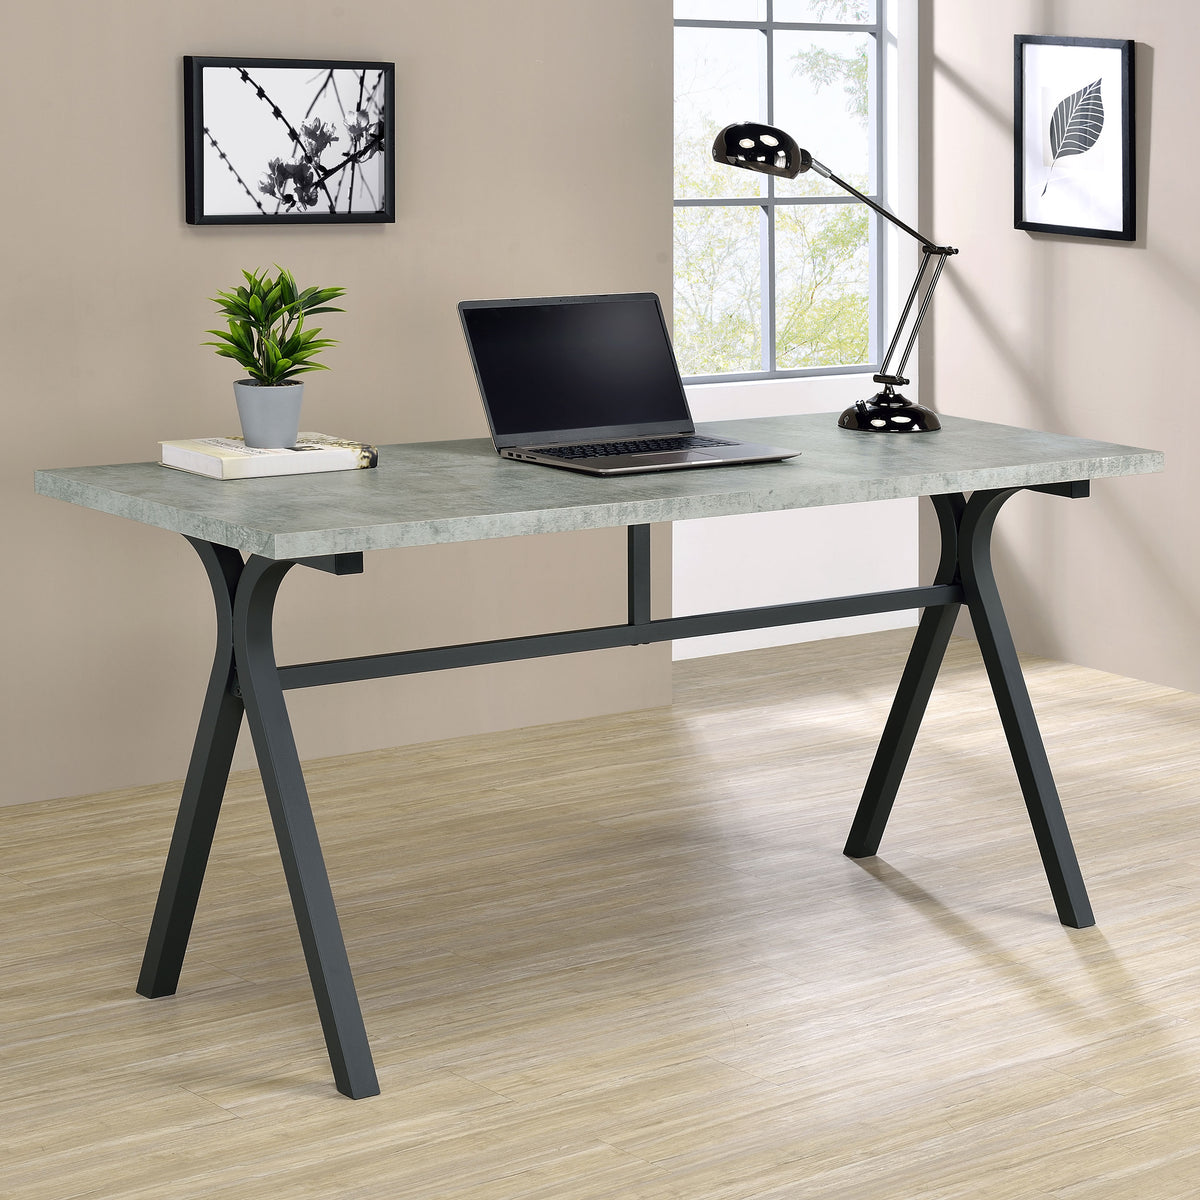 Tatum Rectangular Writing Desk Cement and Gunmetal Tatum Rectangular Writing Desk Cement and Gunmetal Half Price Furniture